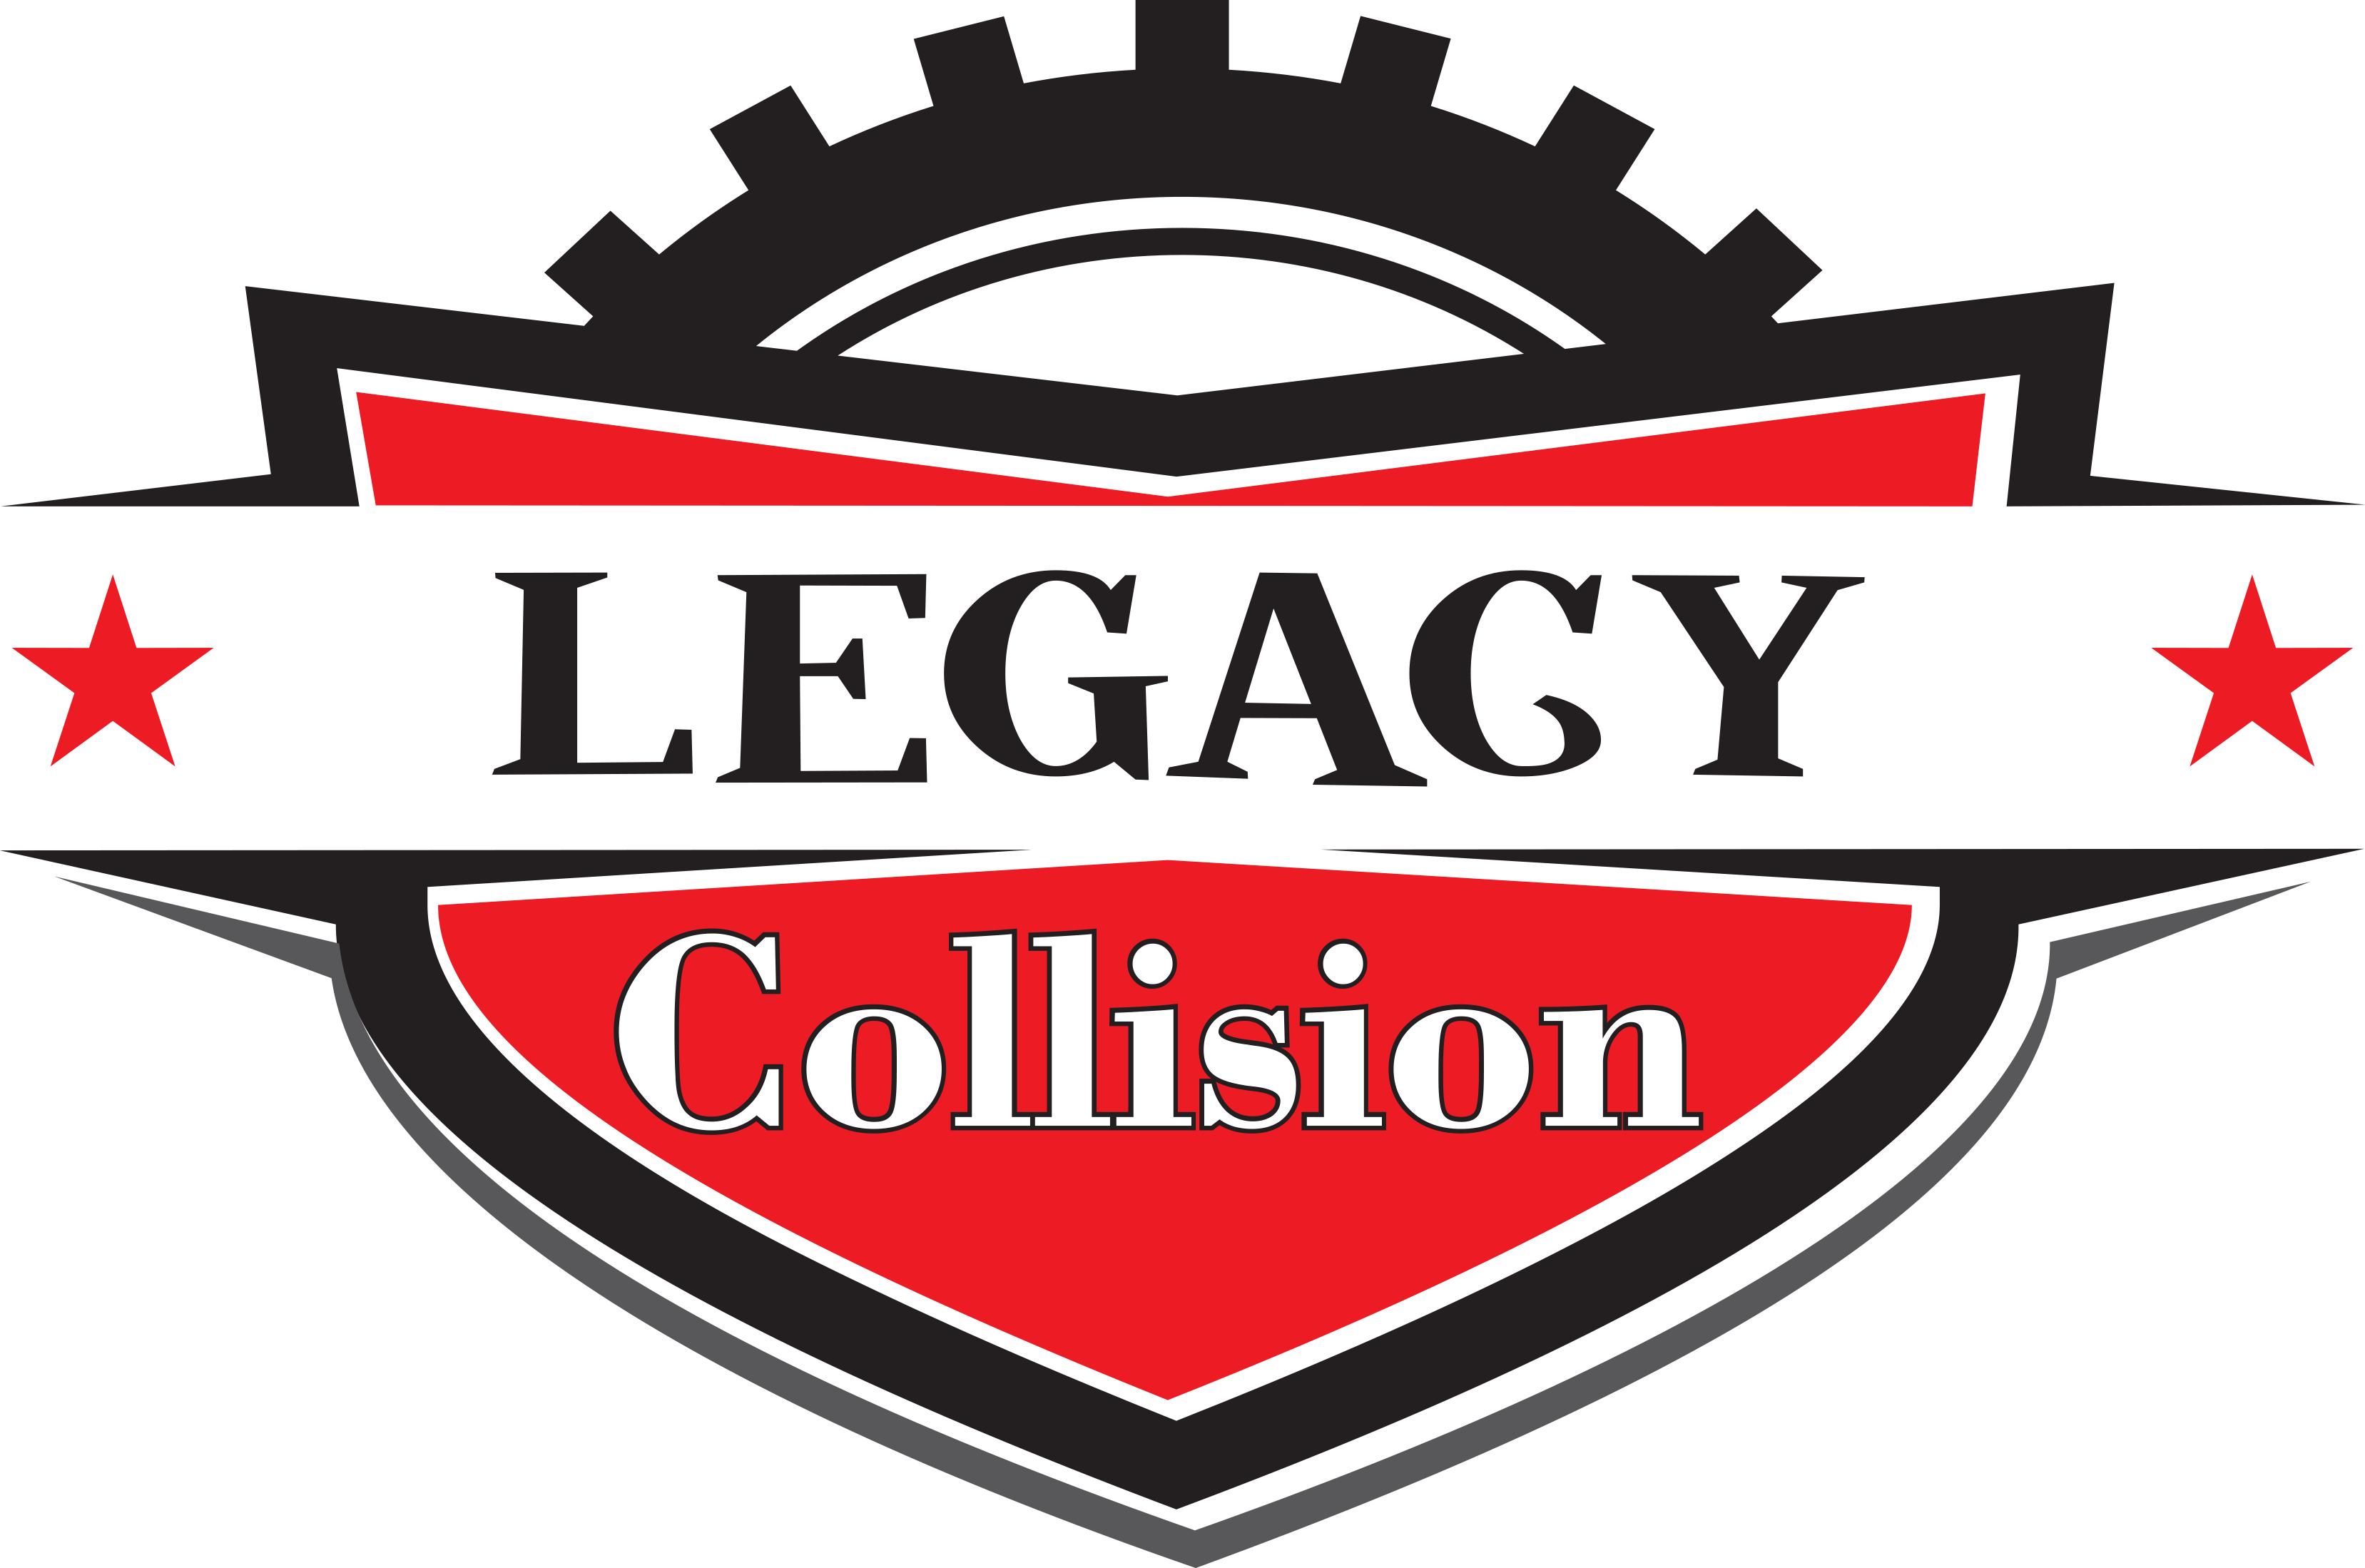 Legacy Collision